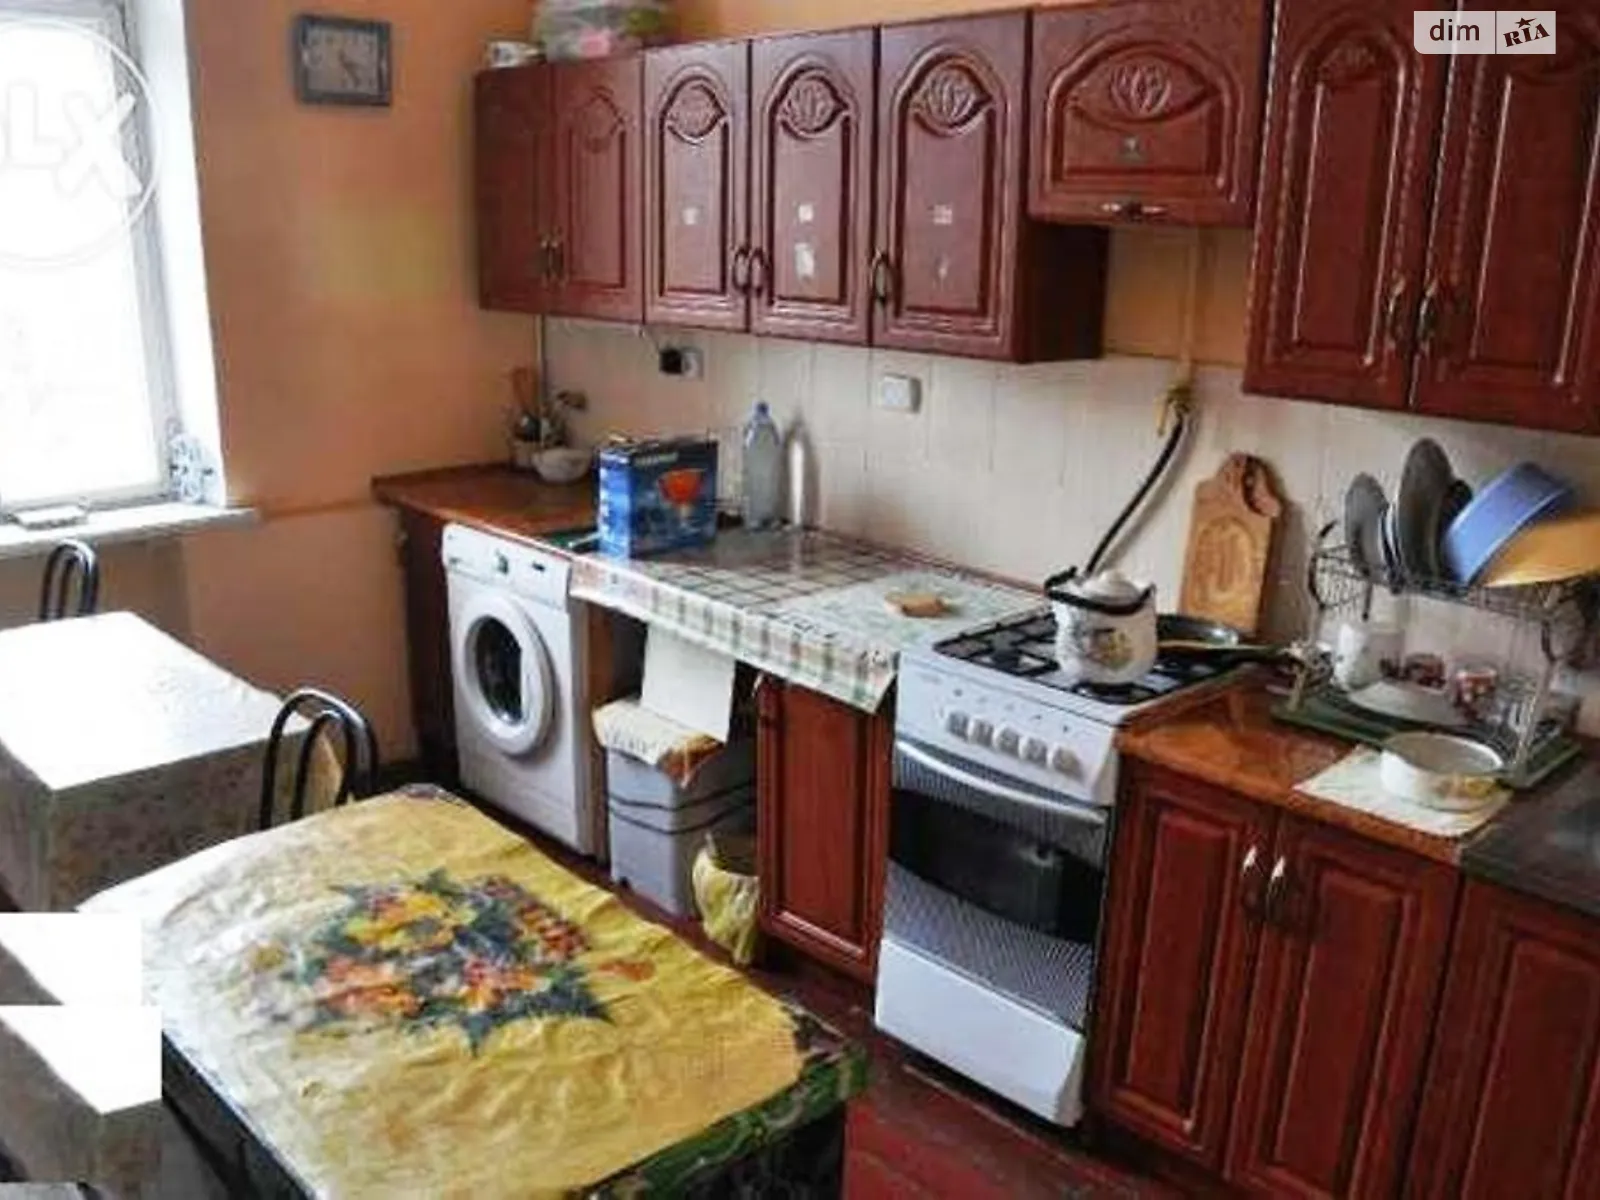 Продается комната 159 кв. м в Одессе, цена: 12500 $ - фото 1